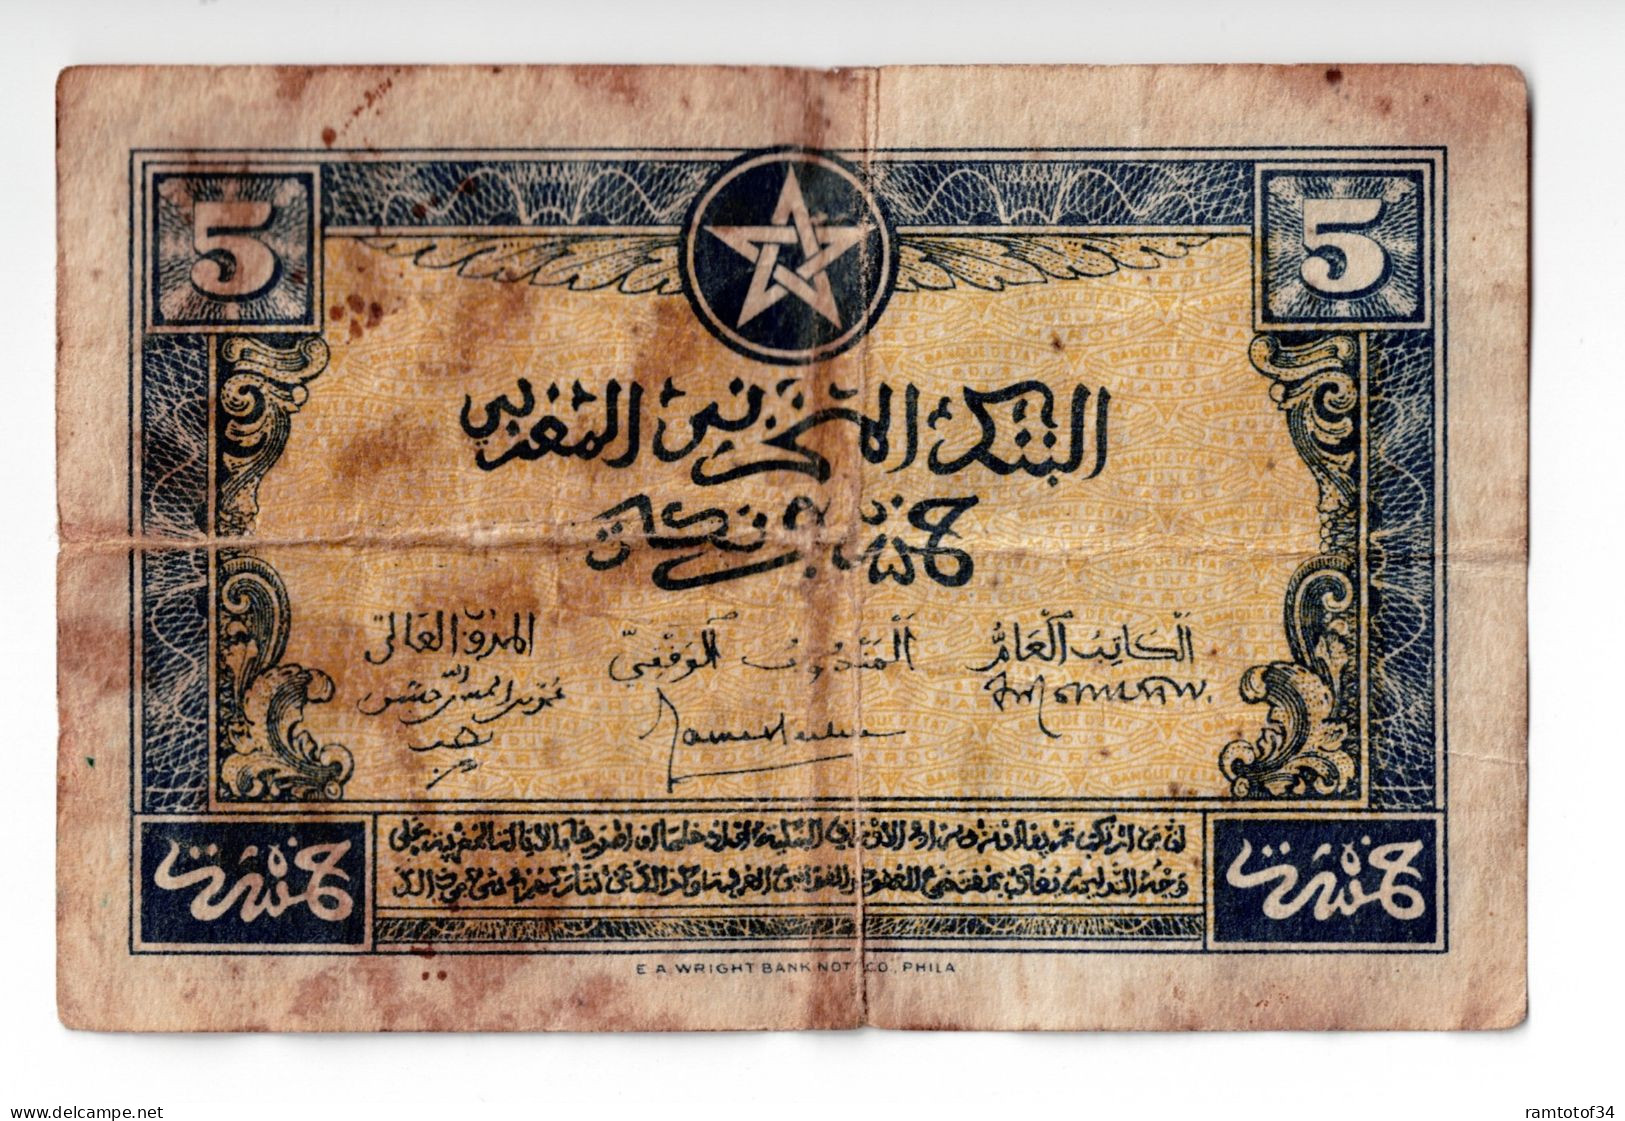 MAROC - 5 Francs 1944 - Marokko